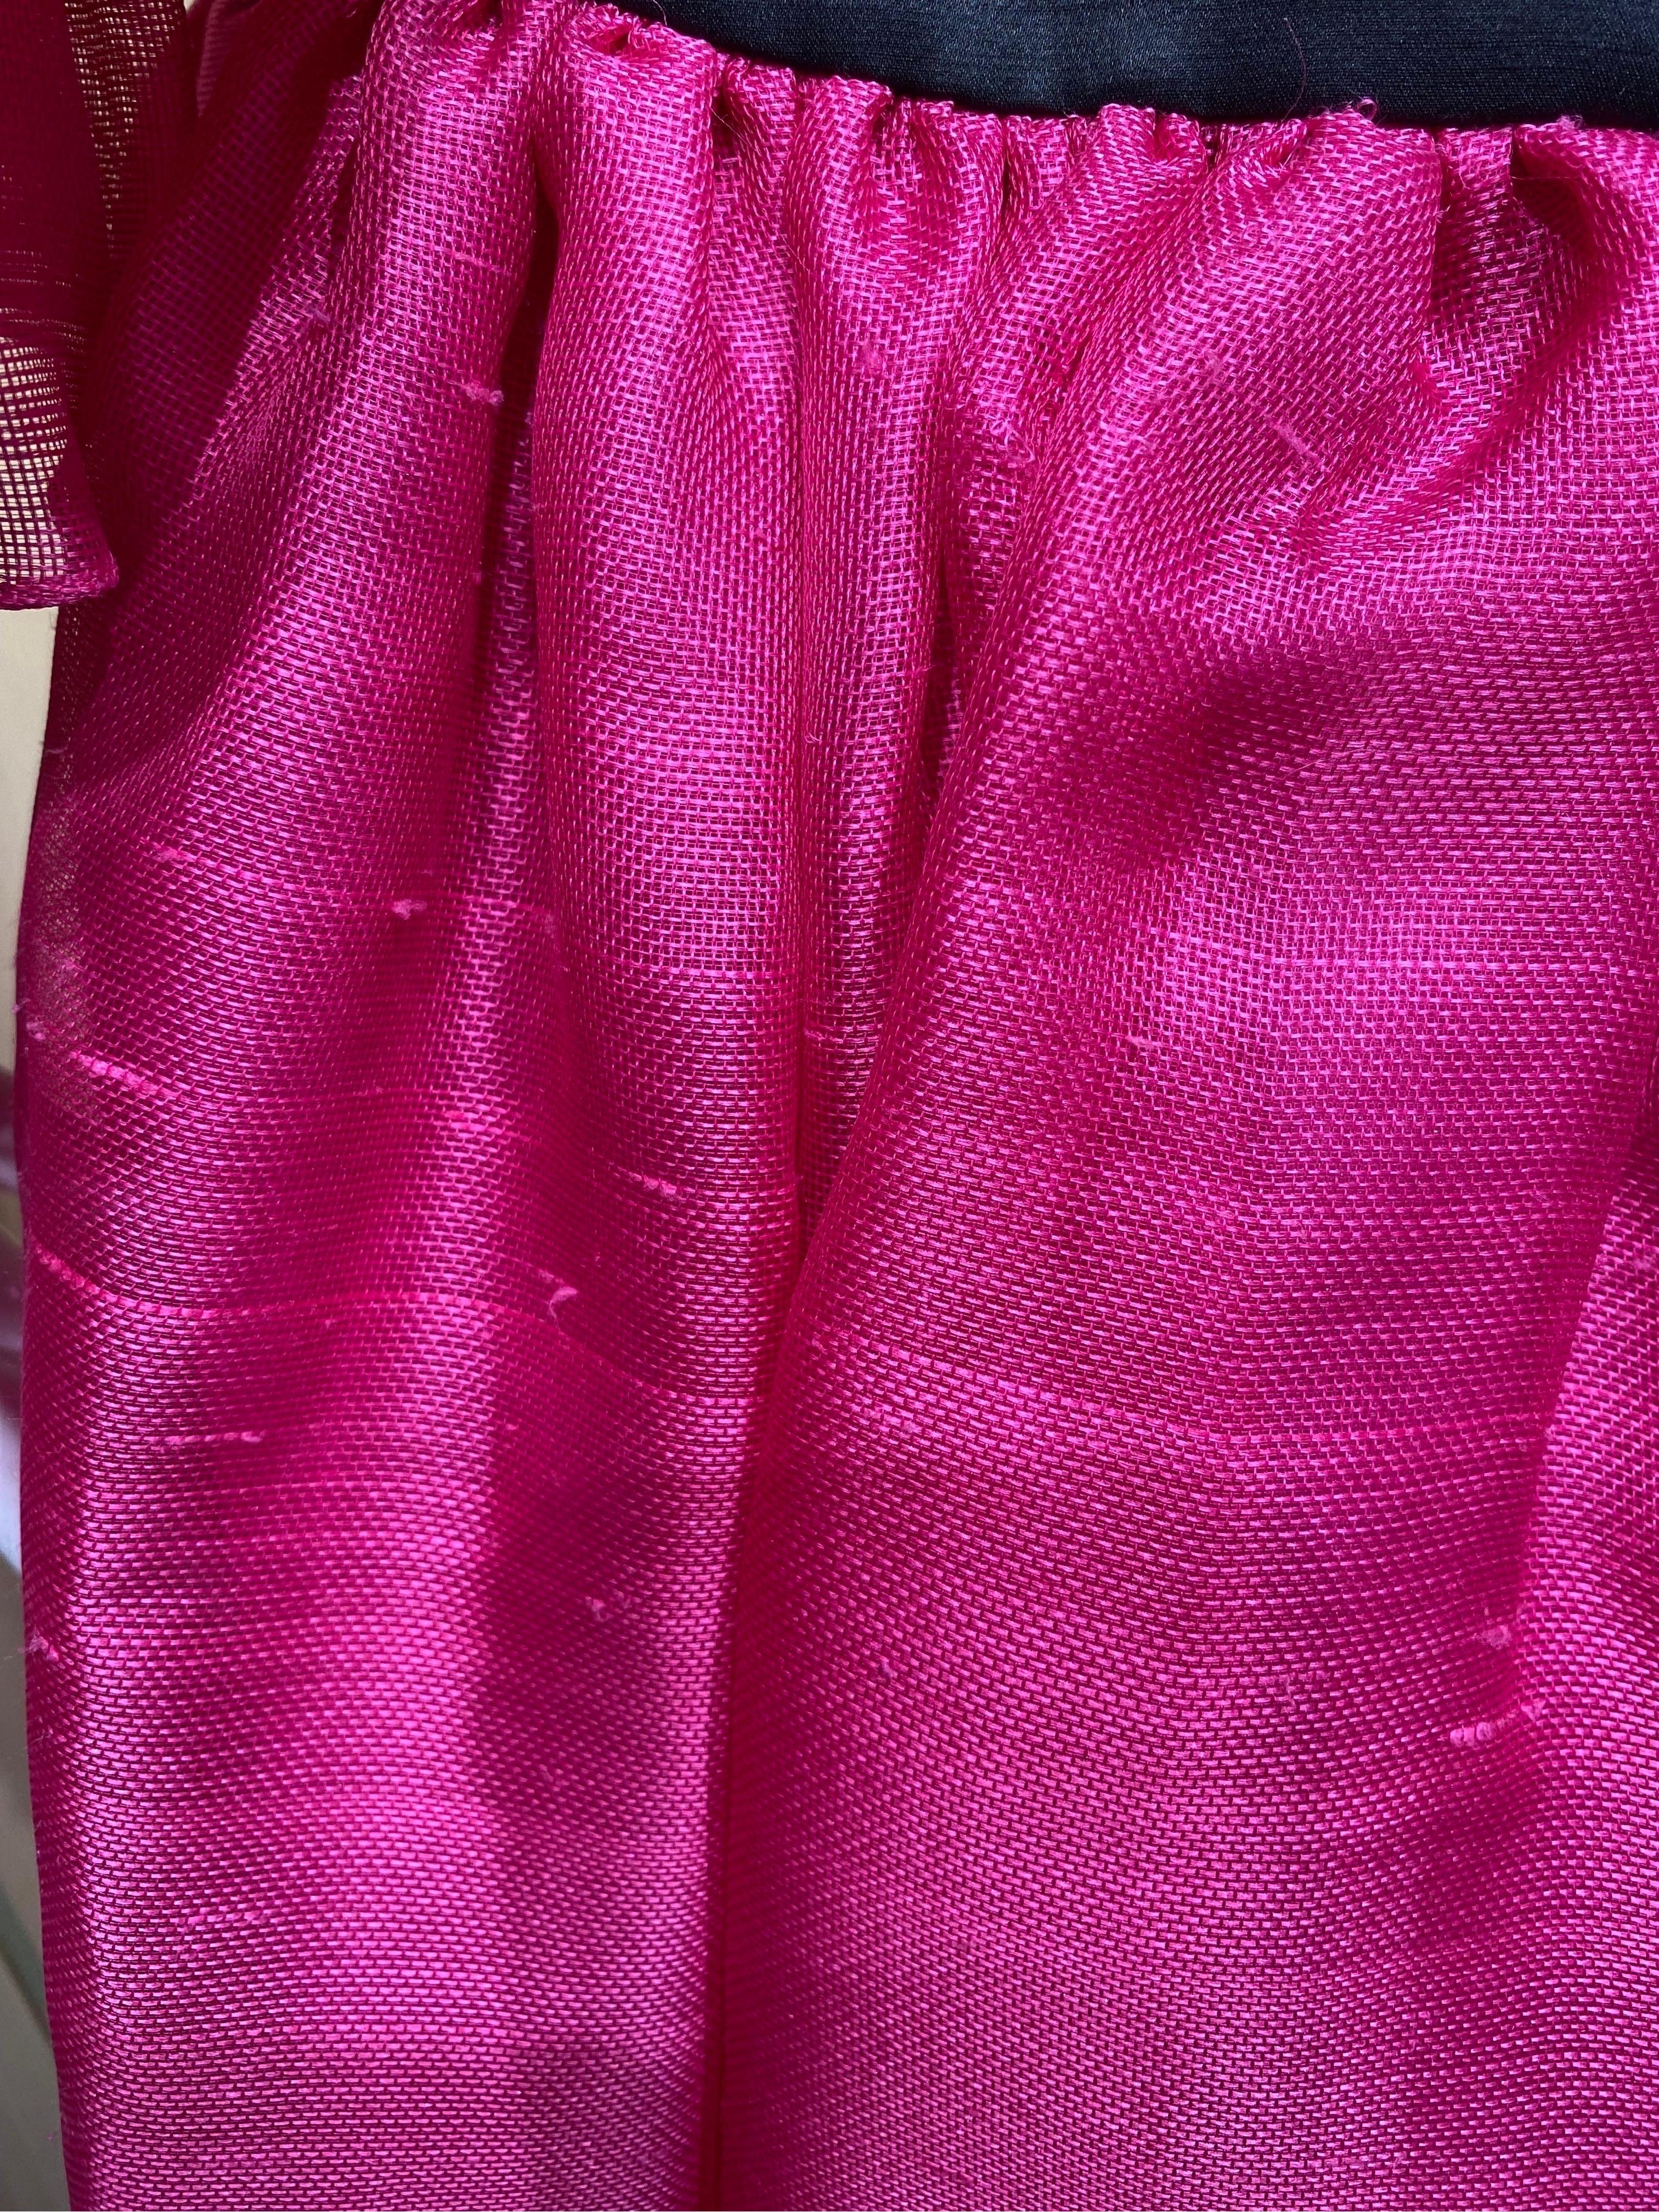 Oscar De La Renta Magenta Pink Silk Dress For Sale 4